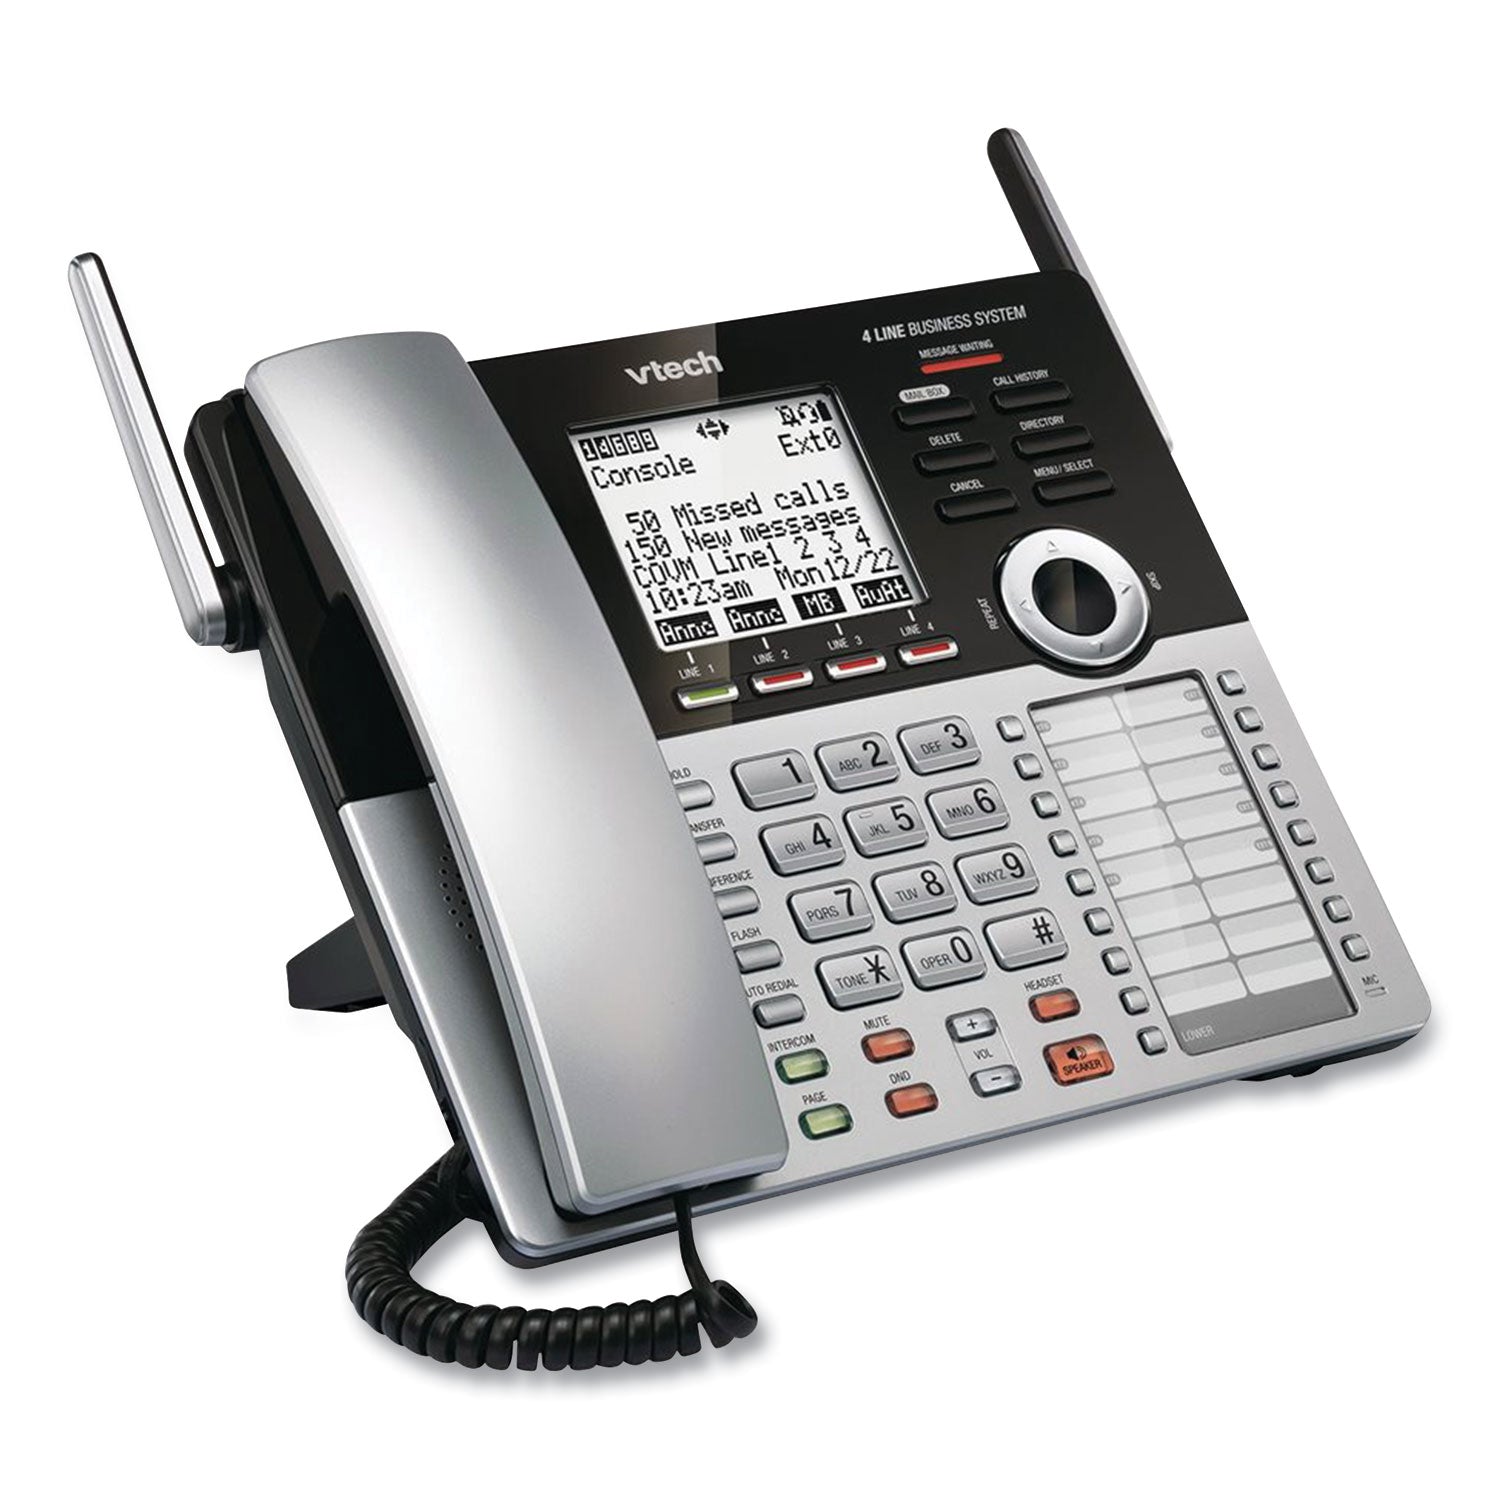 cm18445-four-line-business-system-cordless-phone-silver-black_vtecm18445 - 3